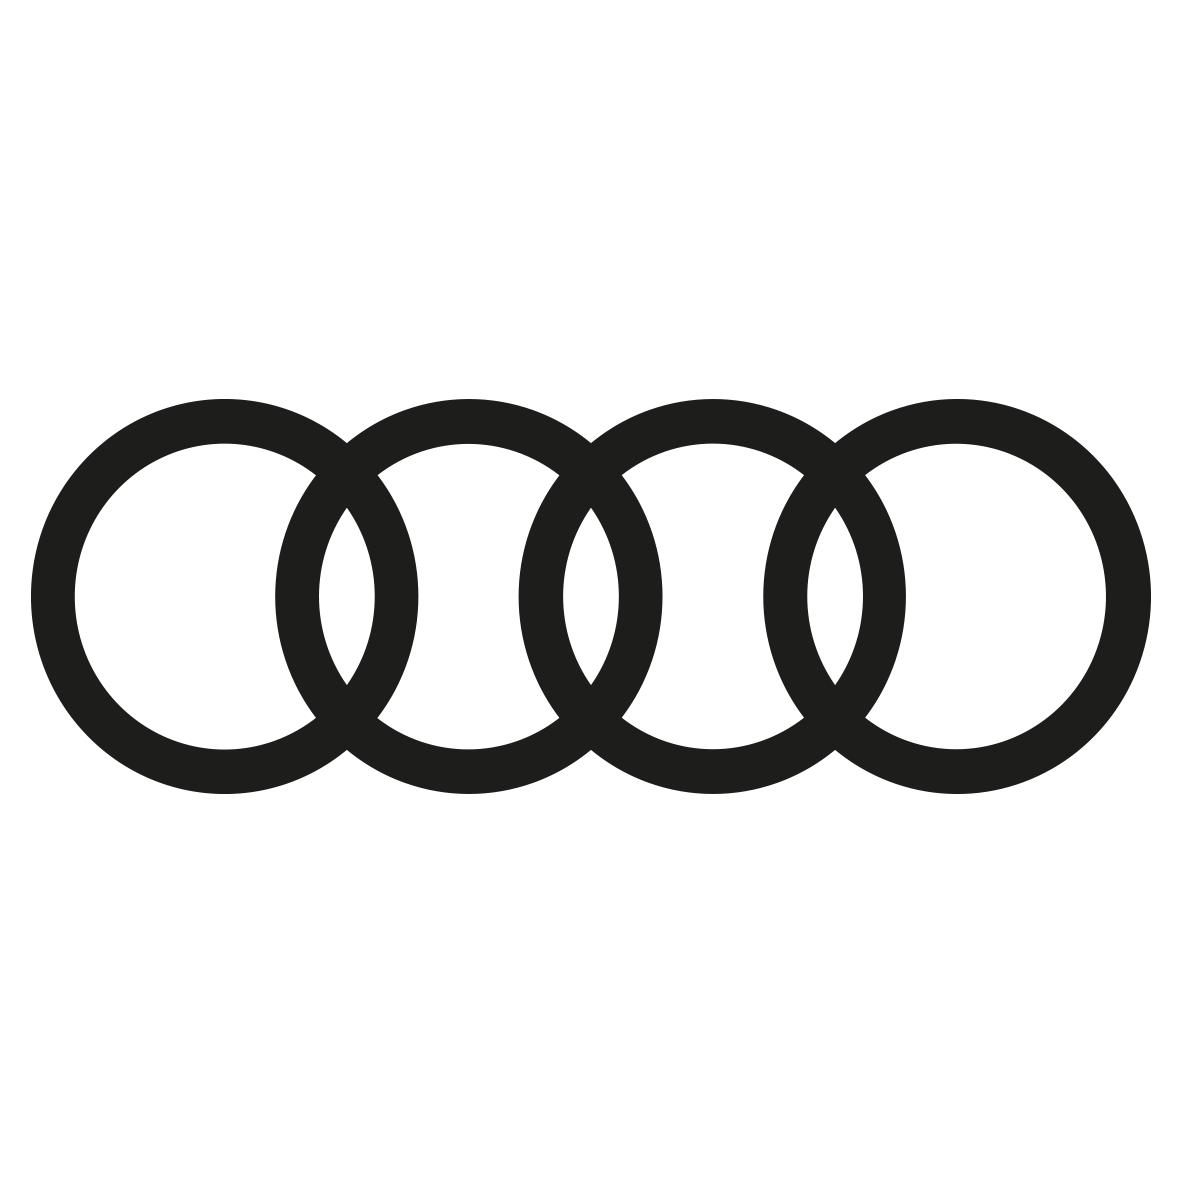 Audi testrit plannen